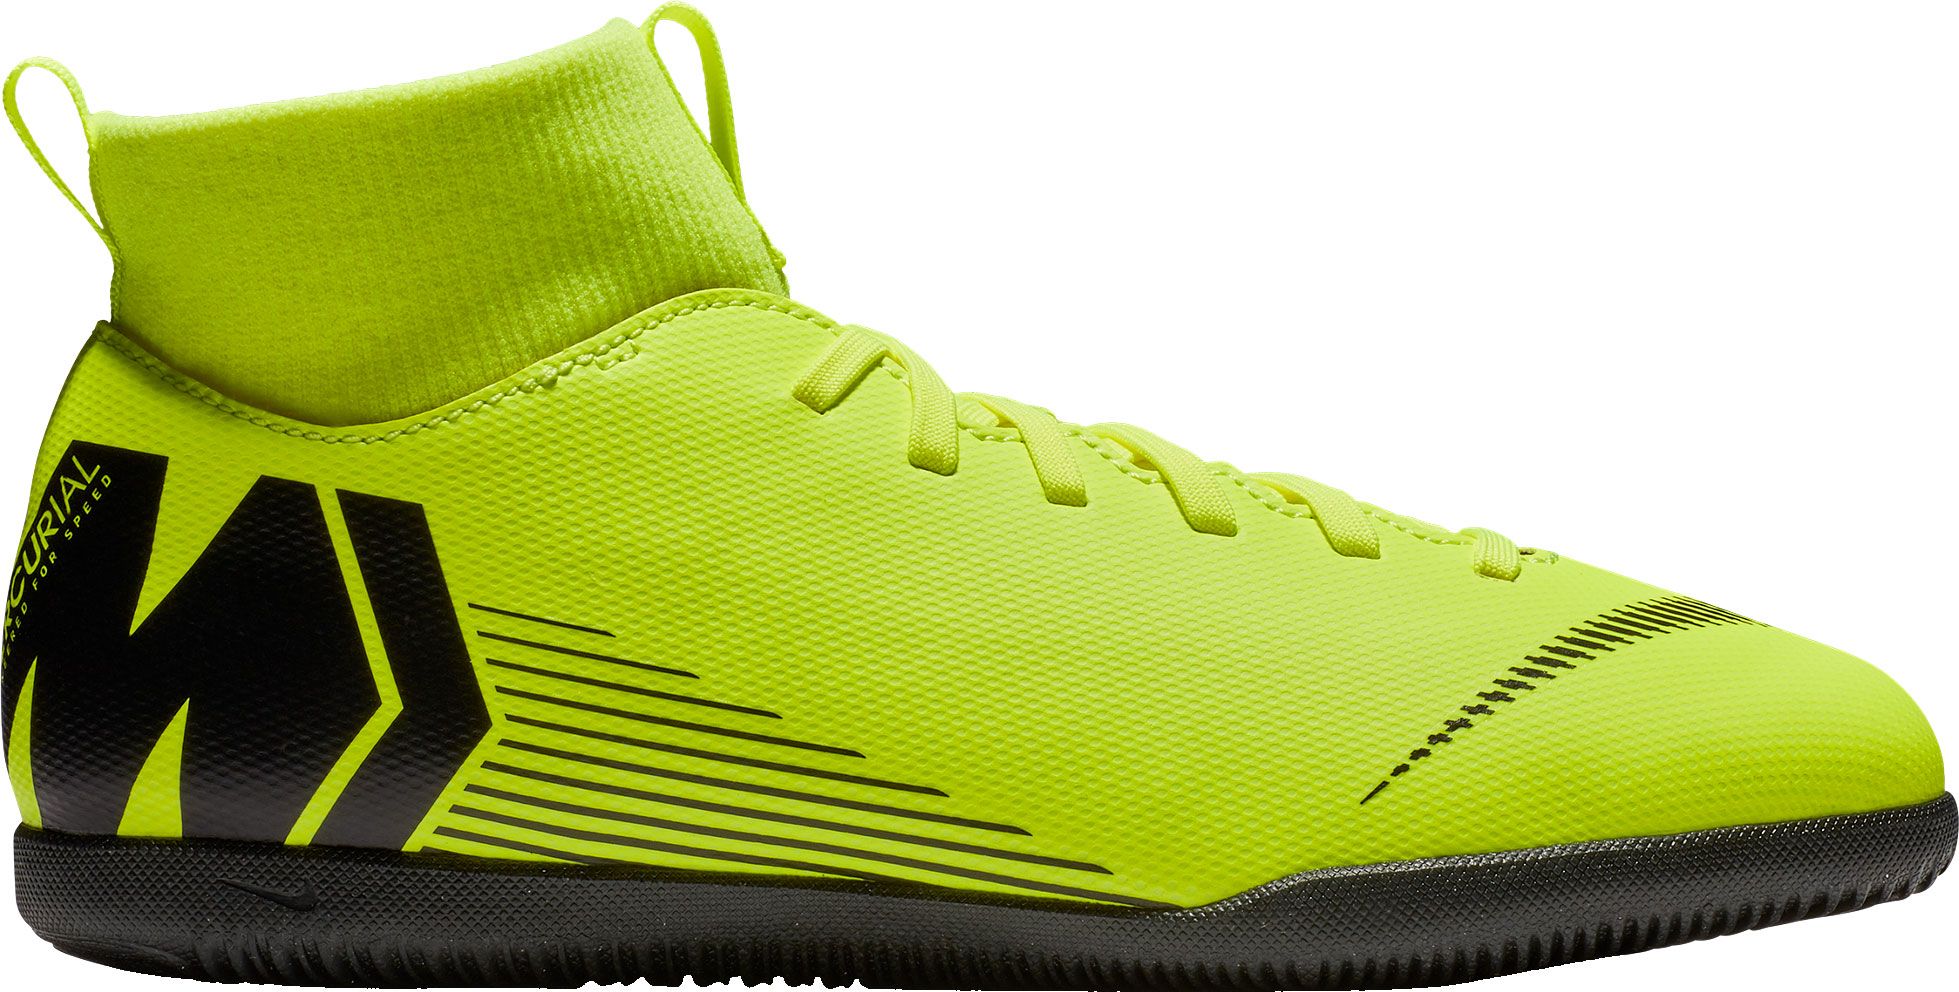 green indoor soccer shoes